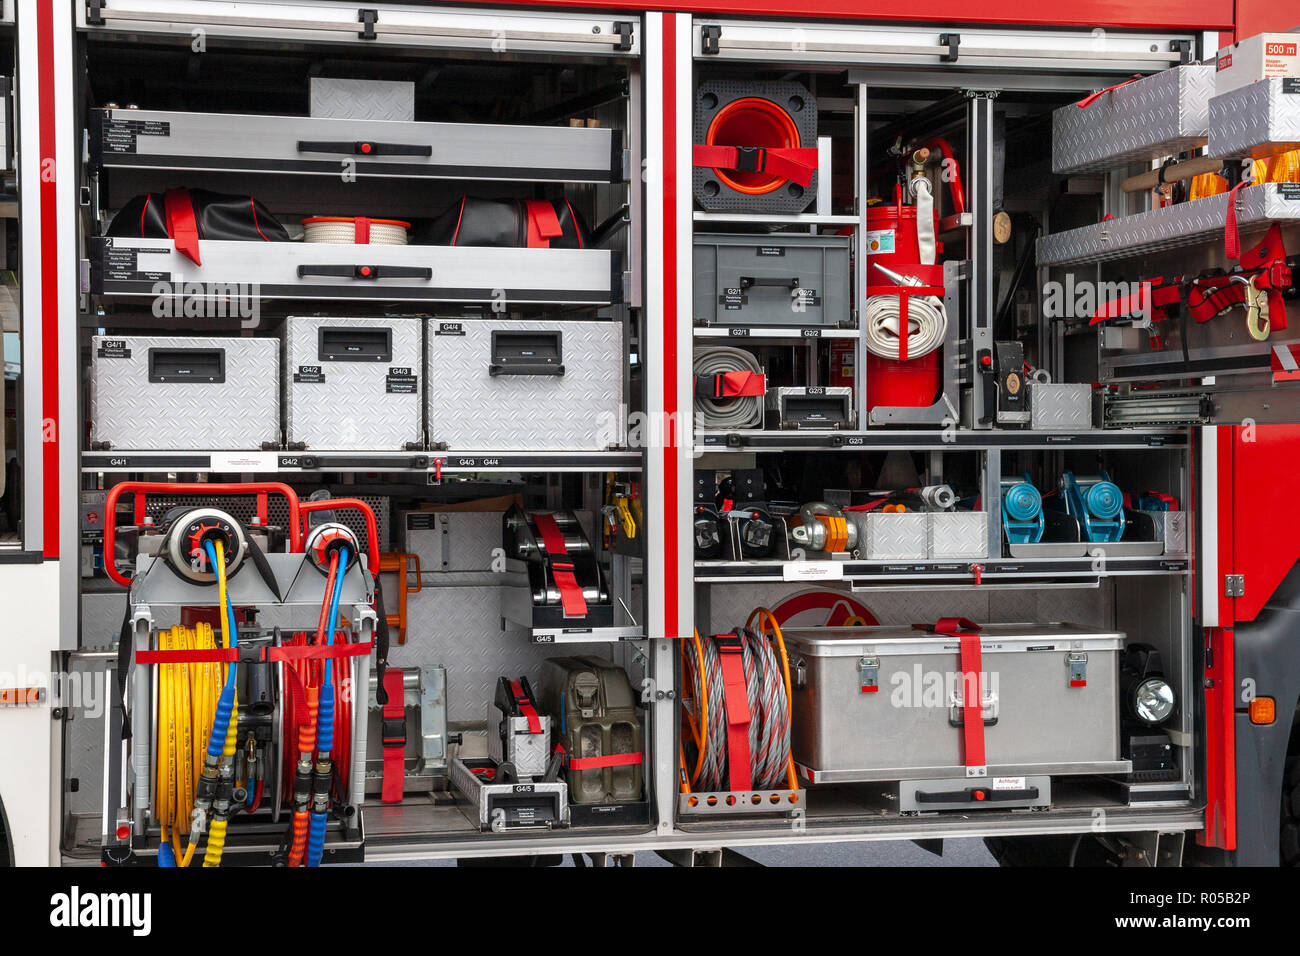 Fire truck equipment Stock Photo